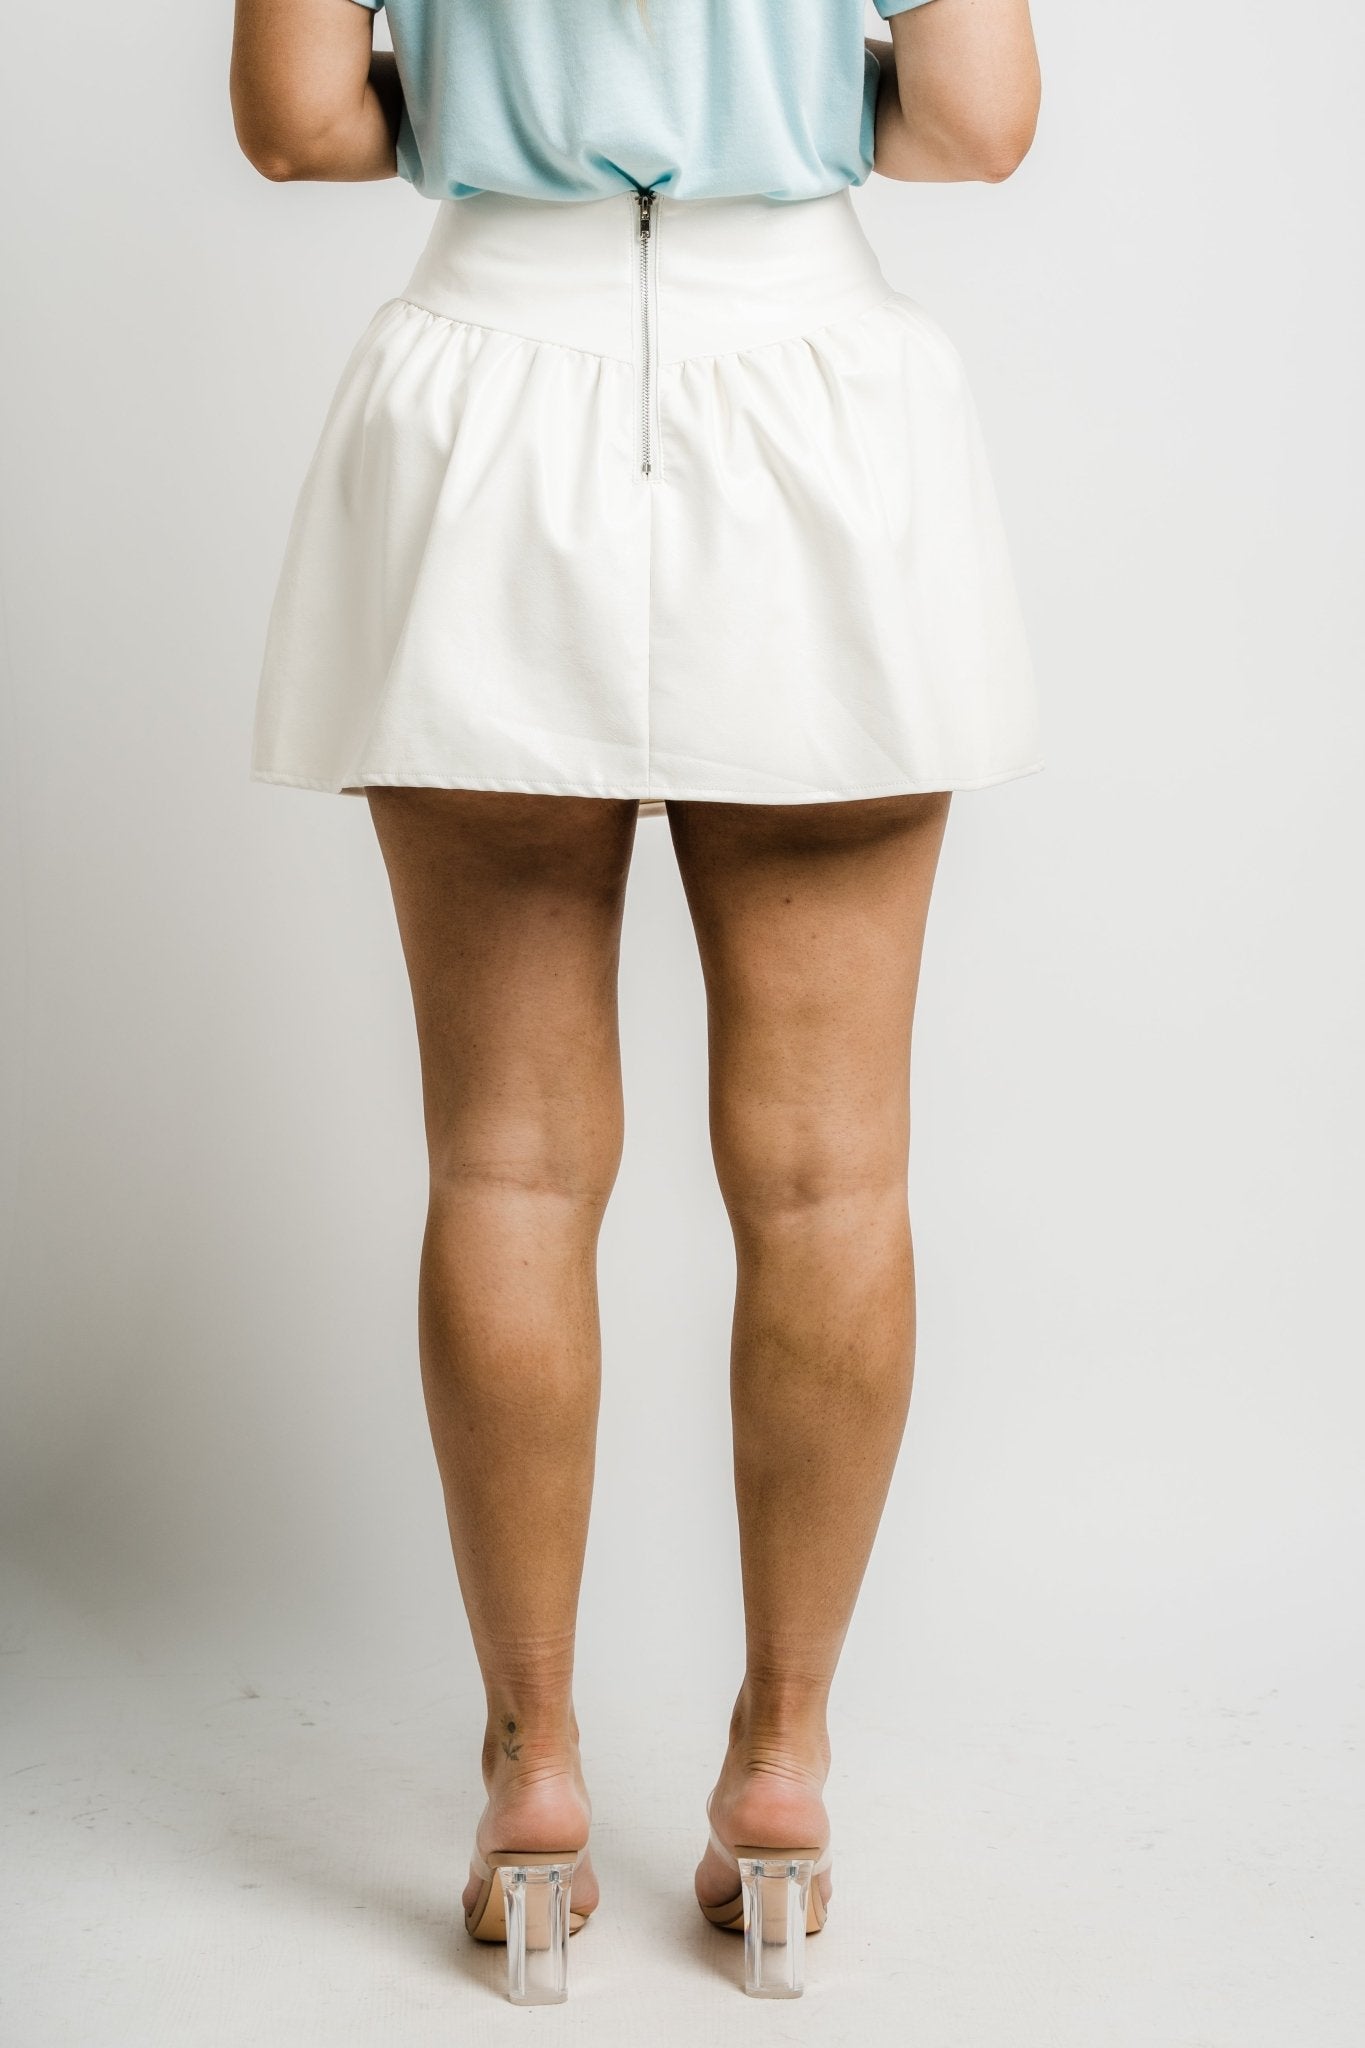 Faux leather ruffle skirt white - Adorable skirt - Unique Bridesmaid Ideas at Lush Fashion Lounge Boutique in Oklahoma